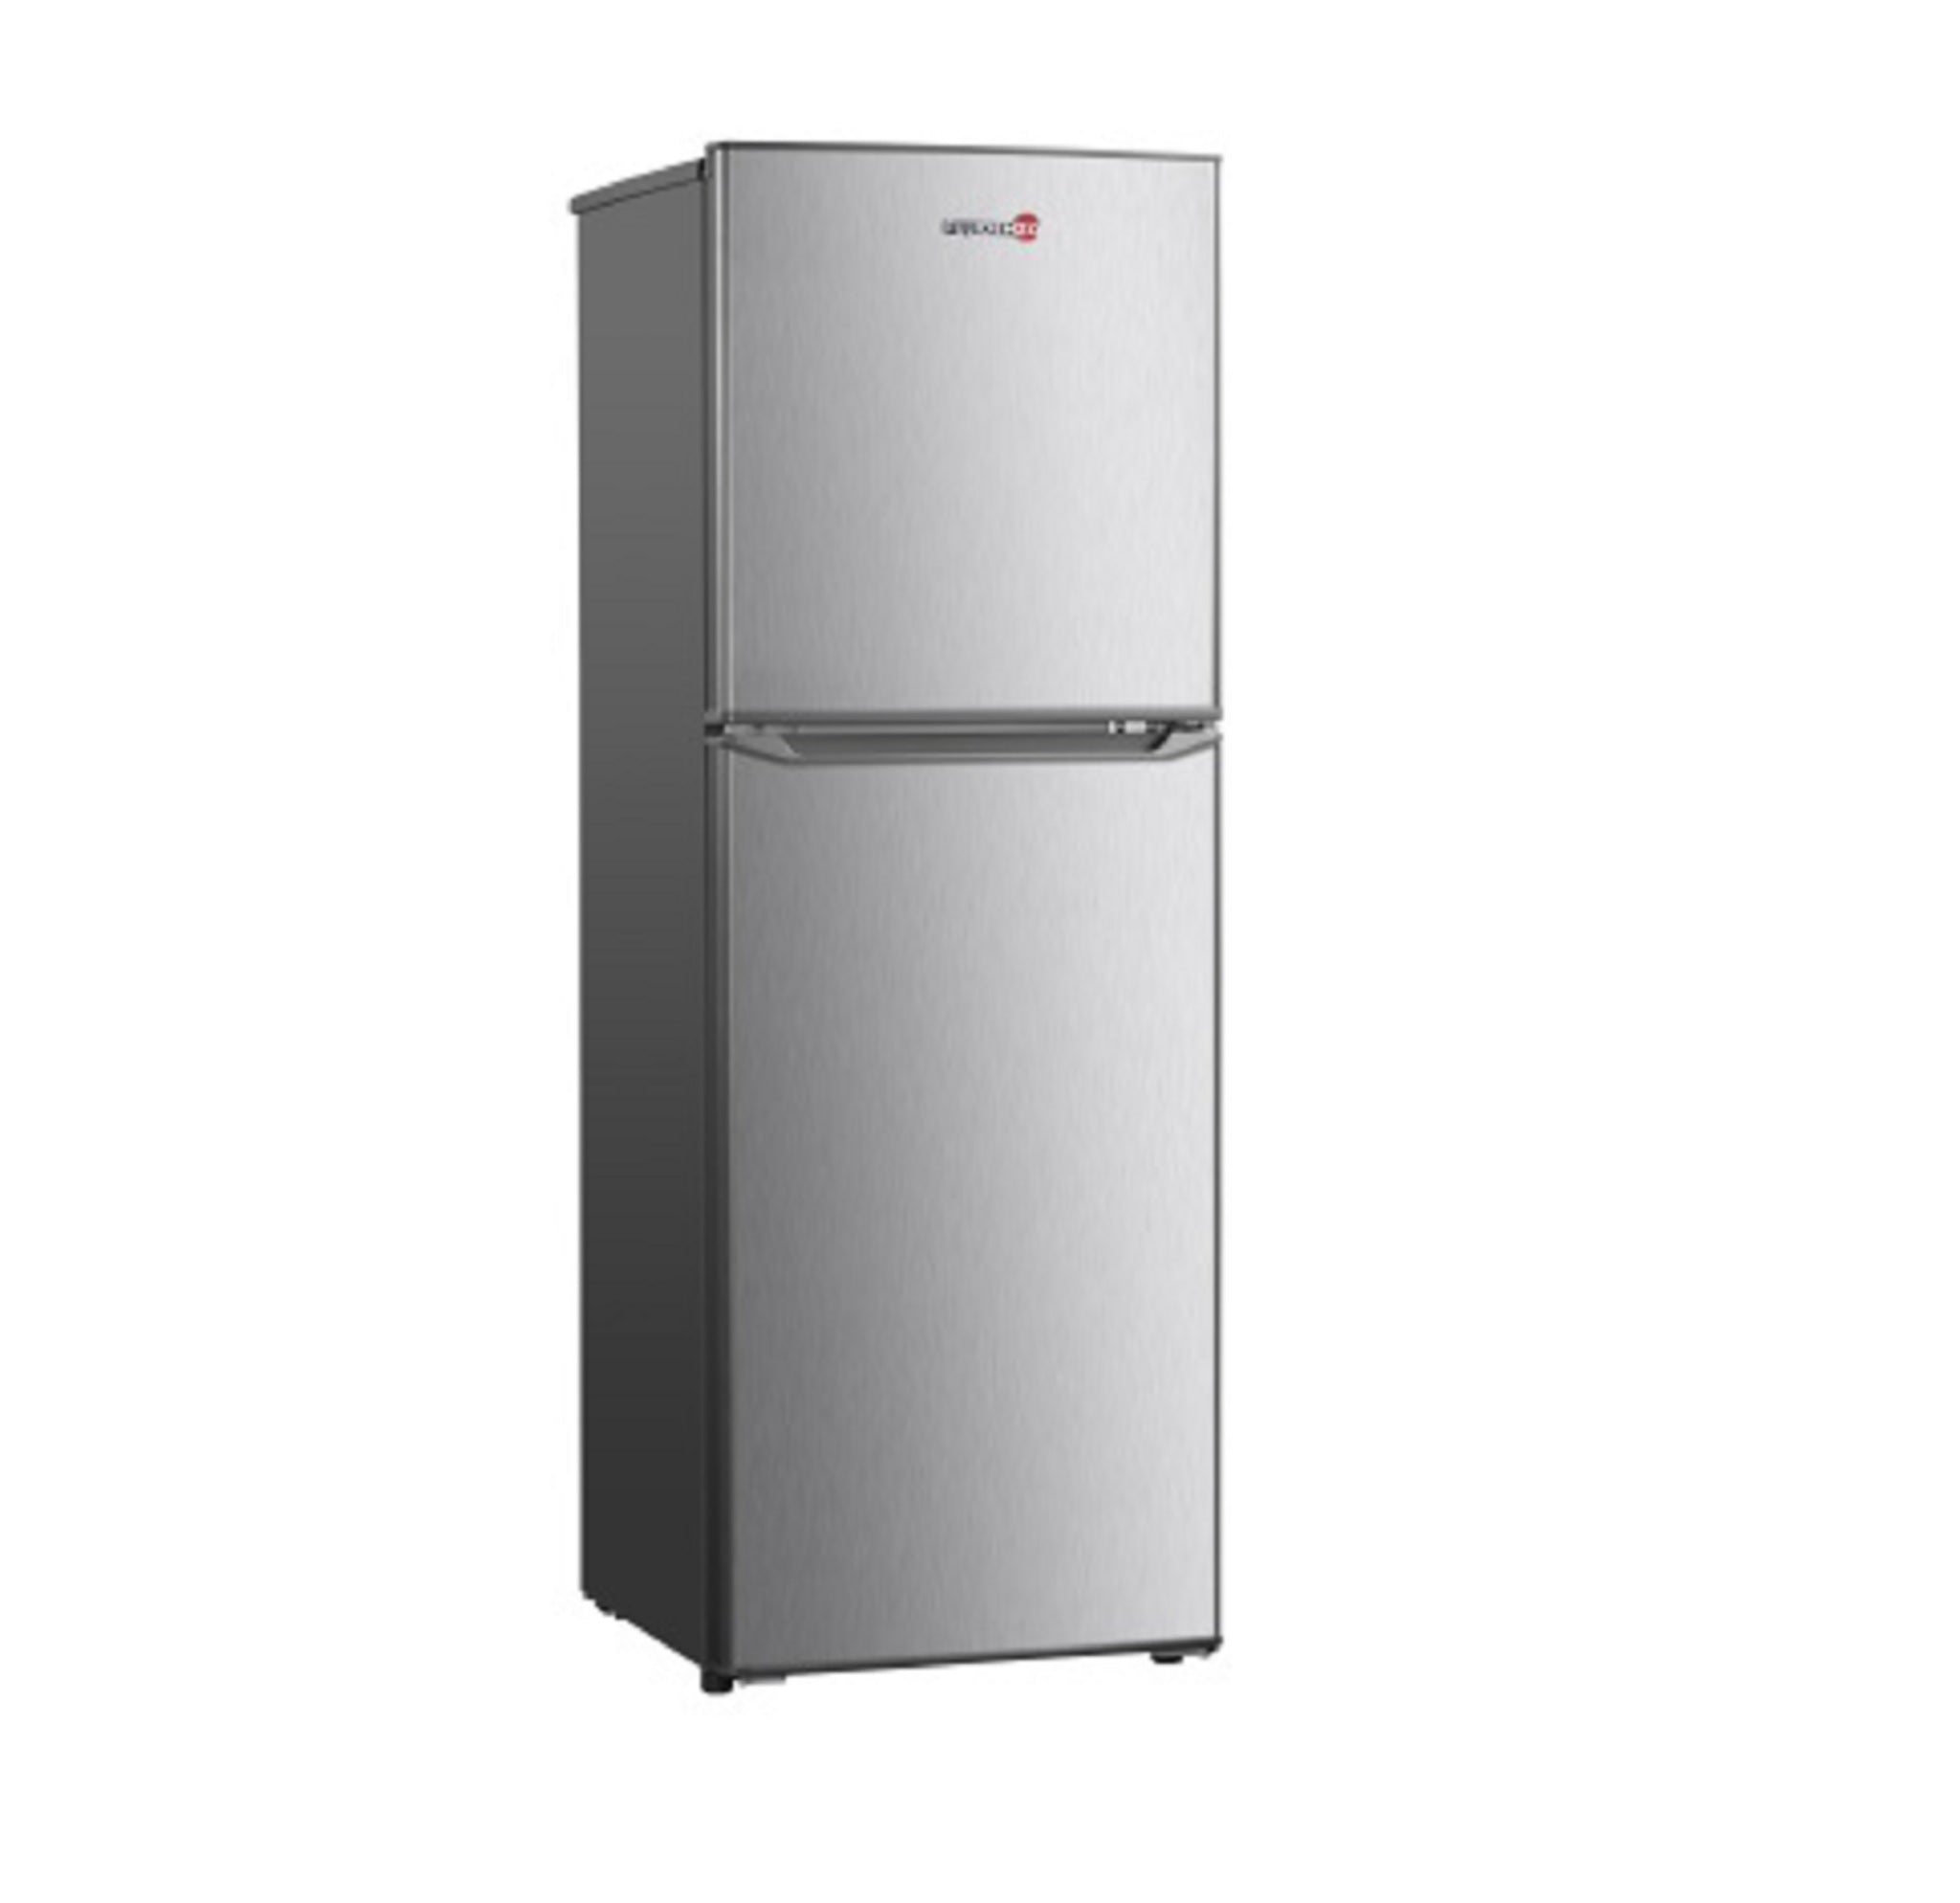 FUJIDENZO RDD-70 S 7 cu. ft. Two-Door Direct Cool Refrigerator Fujidenzo